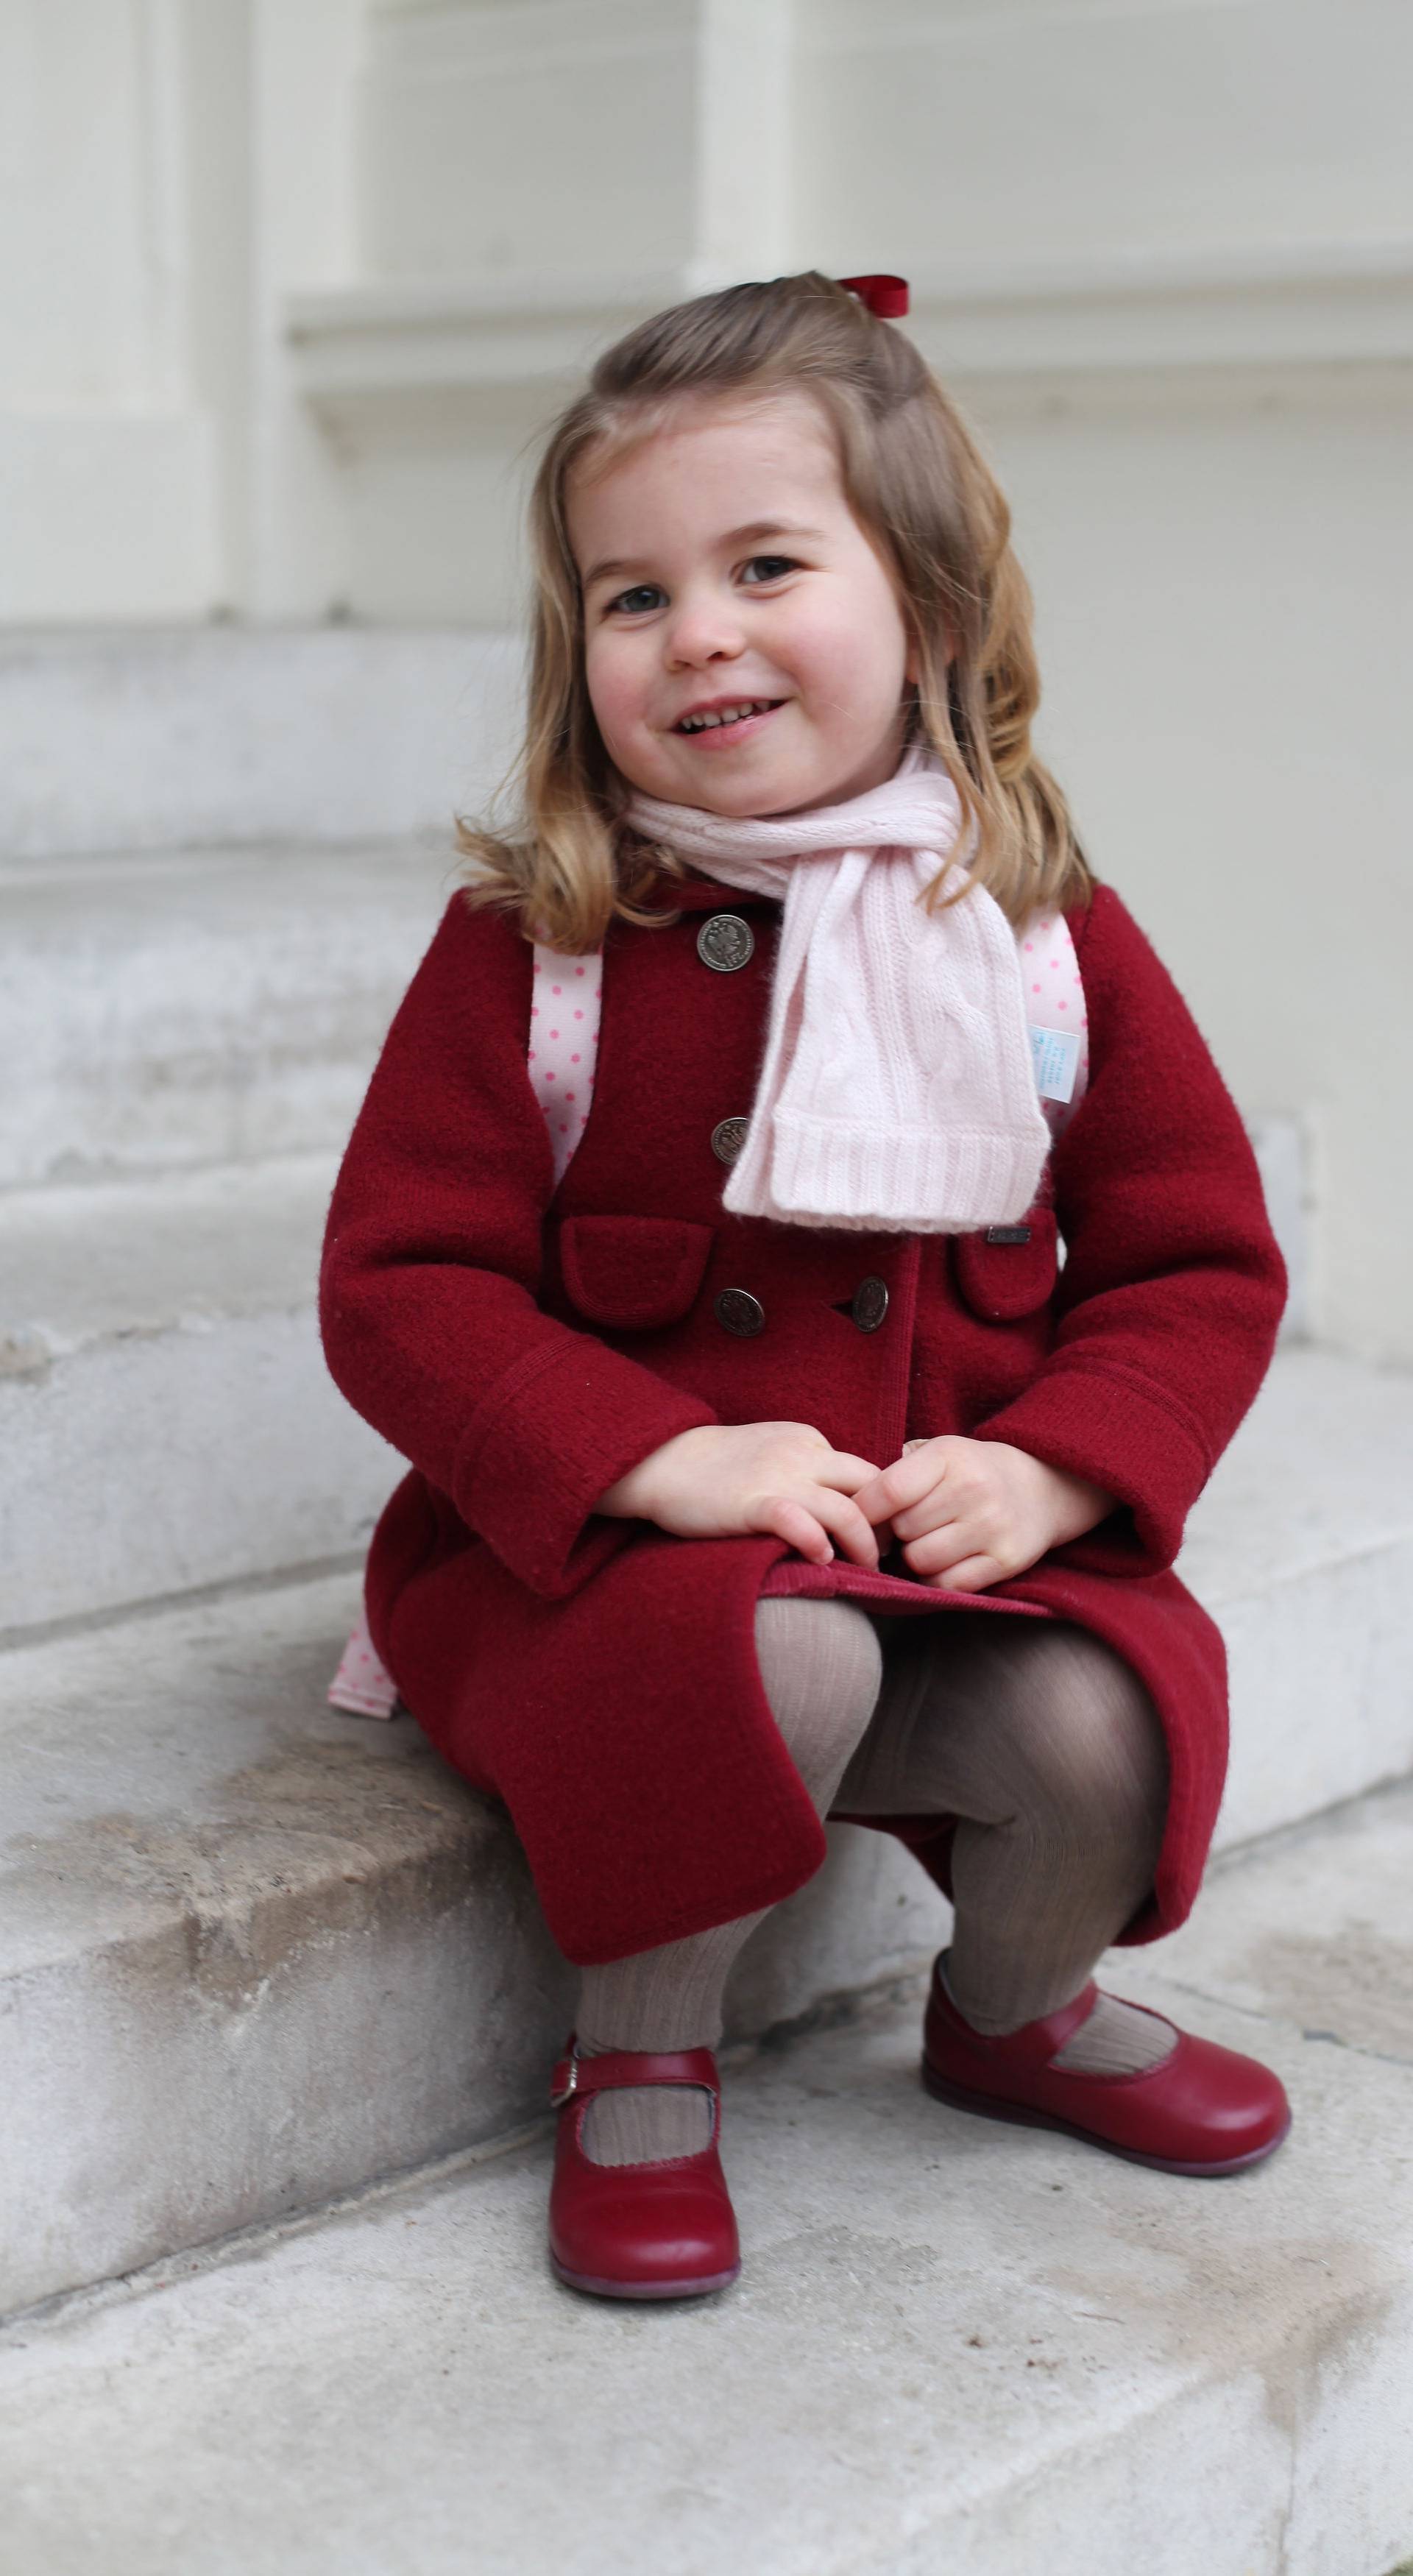 Princess Charlotte attends nursey